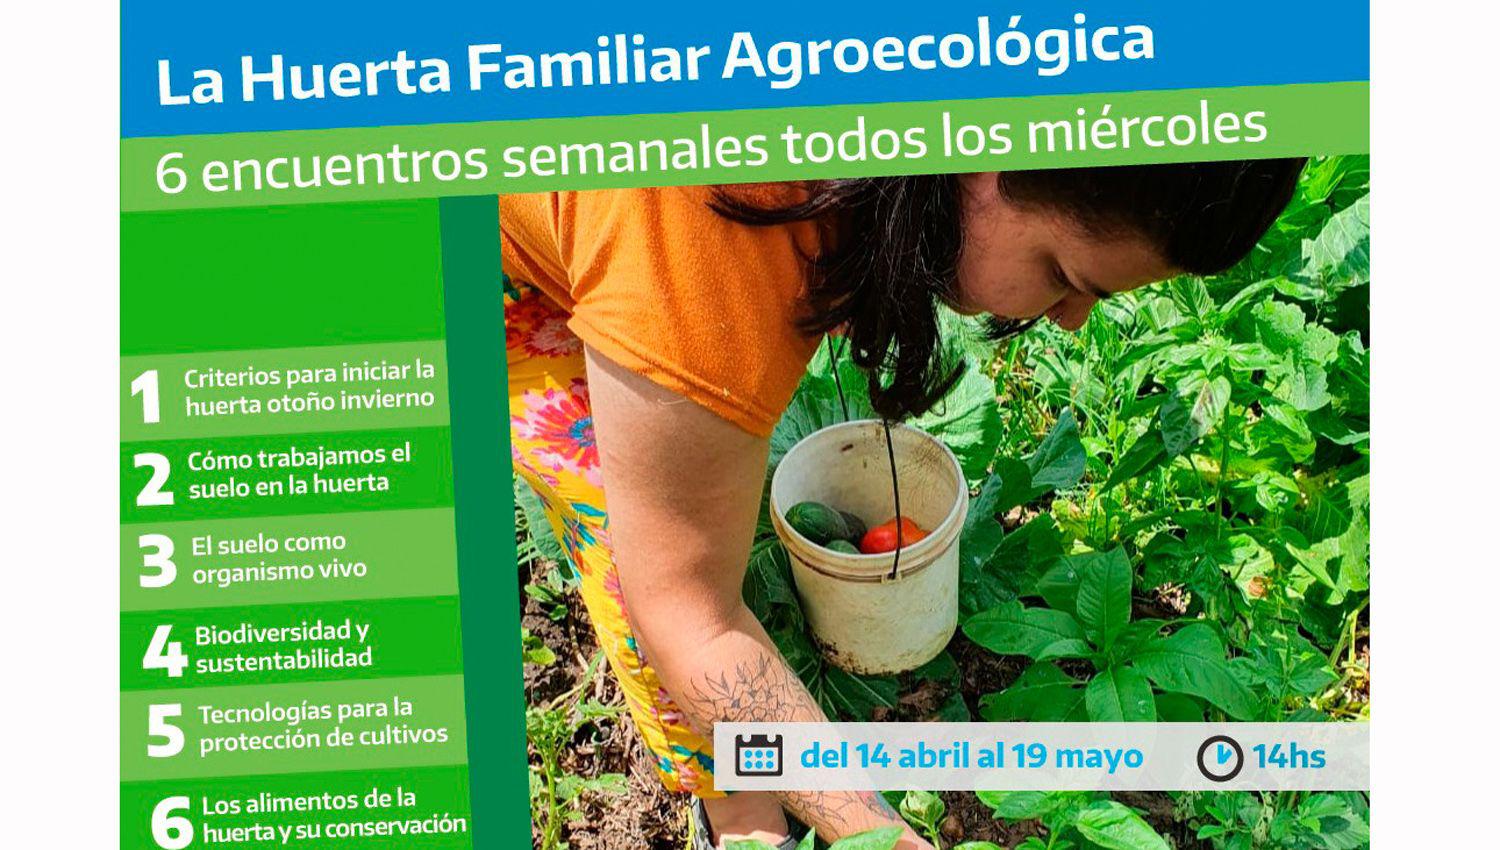 Invitan a una capacitacioacuten virtual sobre Huerta Agroecoloacutegica Familiar